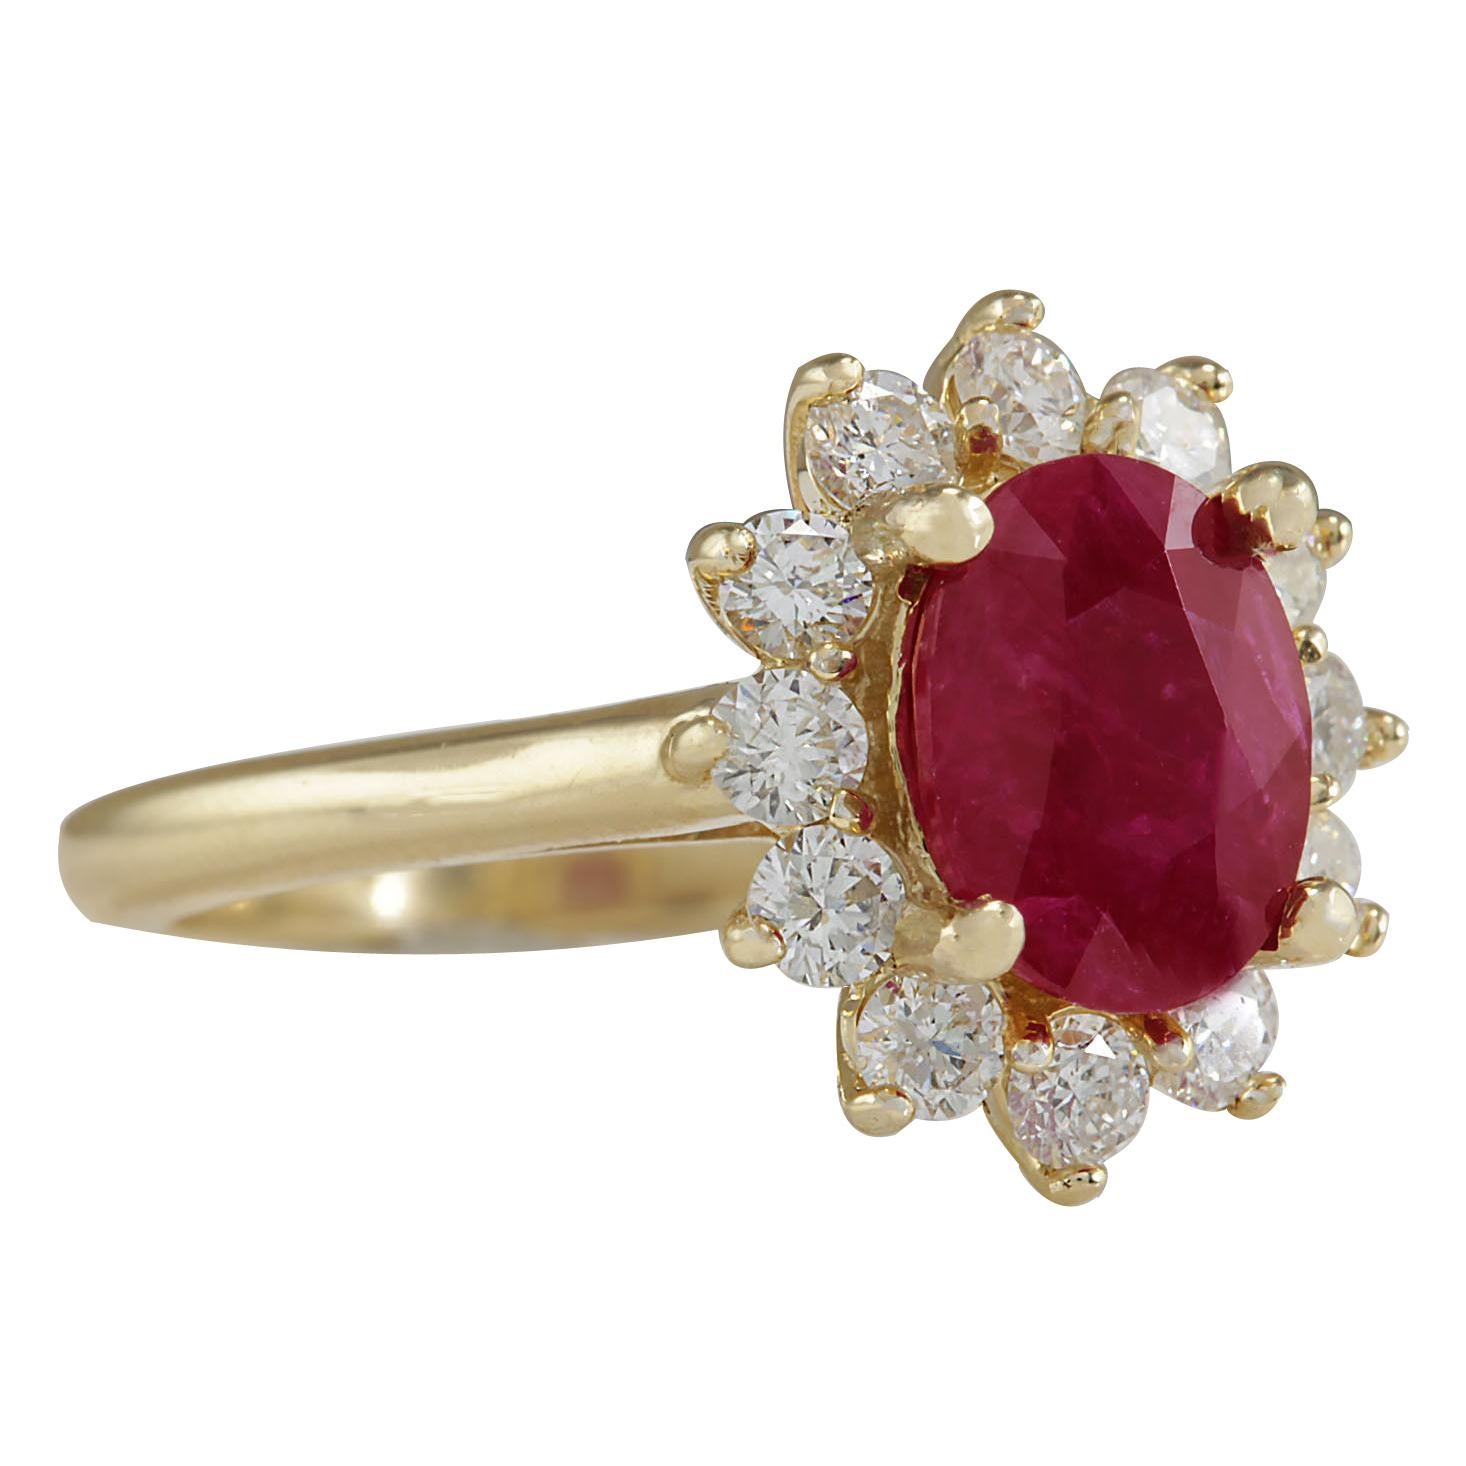 3.57 Carat Natural Ruby 14 Karat Yellow Gold Diamond Ring
Stamped: 14K Yellow Gold
Total Ring Weight: 4.2 Grams
Total Natural Ruby Weight is 2.44 Carat (Measures: 9.00x7.00 mm)
Color: Red
Total Natural Diamond Weight is 1.13 Carat
Color: F-G,